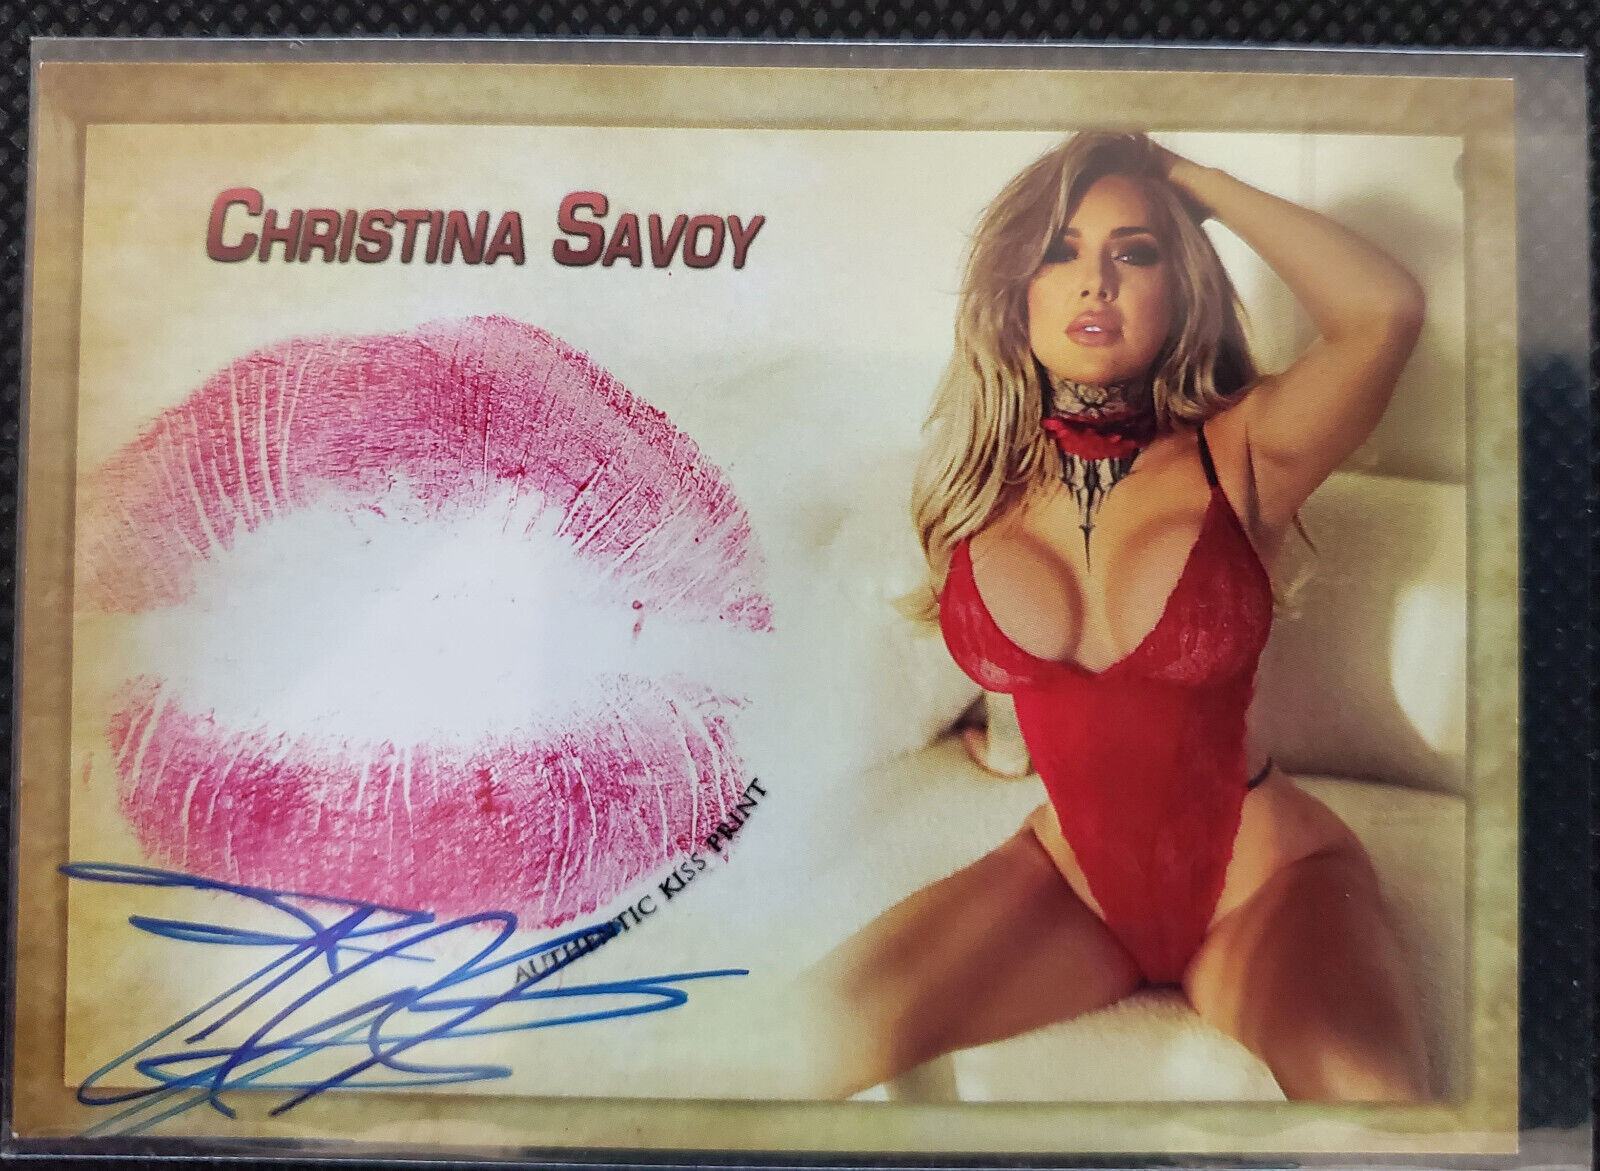 2022 Collectors Expo Christina Savoy Adult Star Autographed Kiss Card